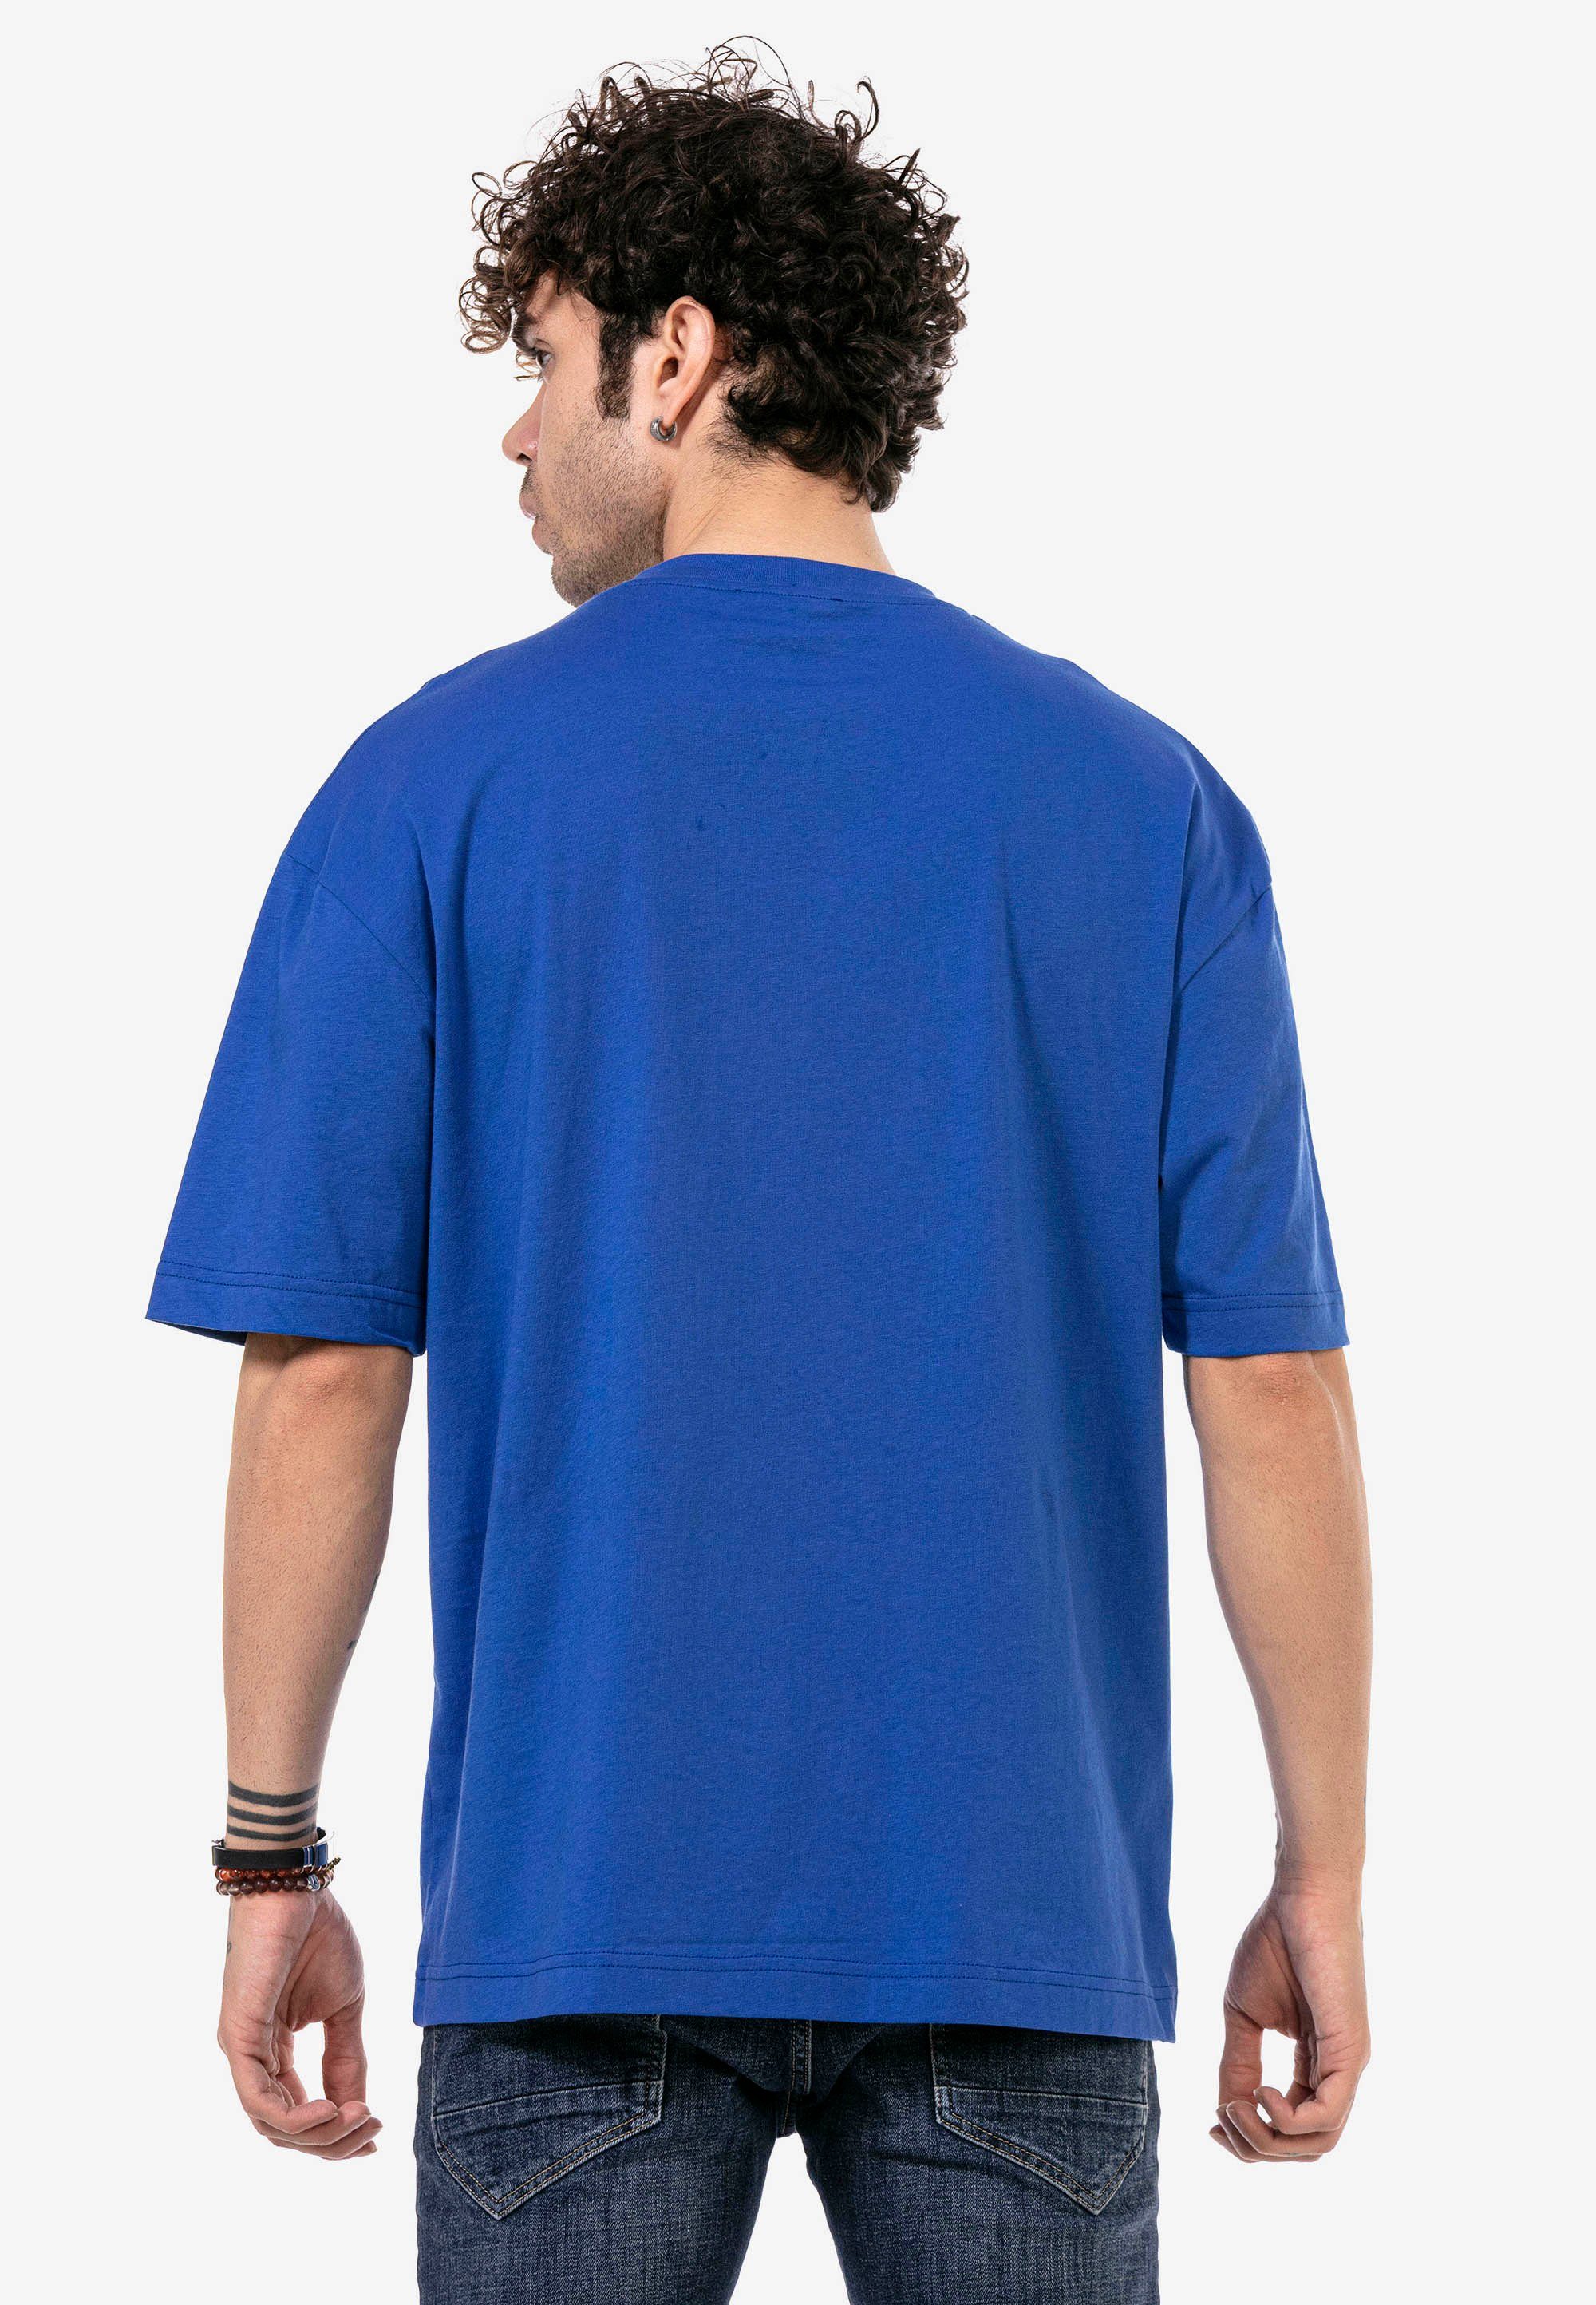 RedBridge T-Shirt im Oversize-Schnitt angesagten blau